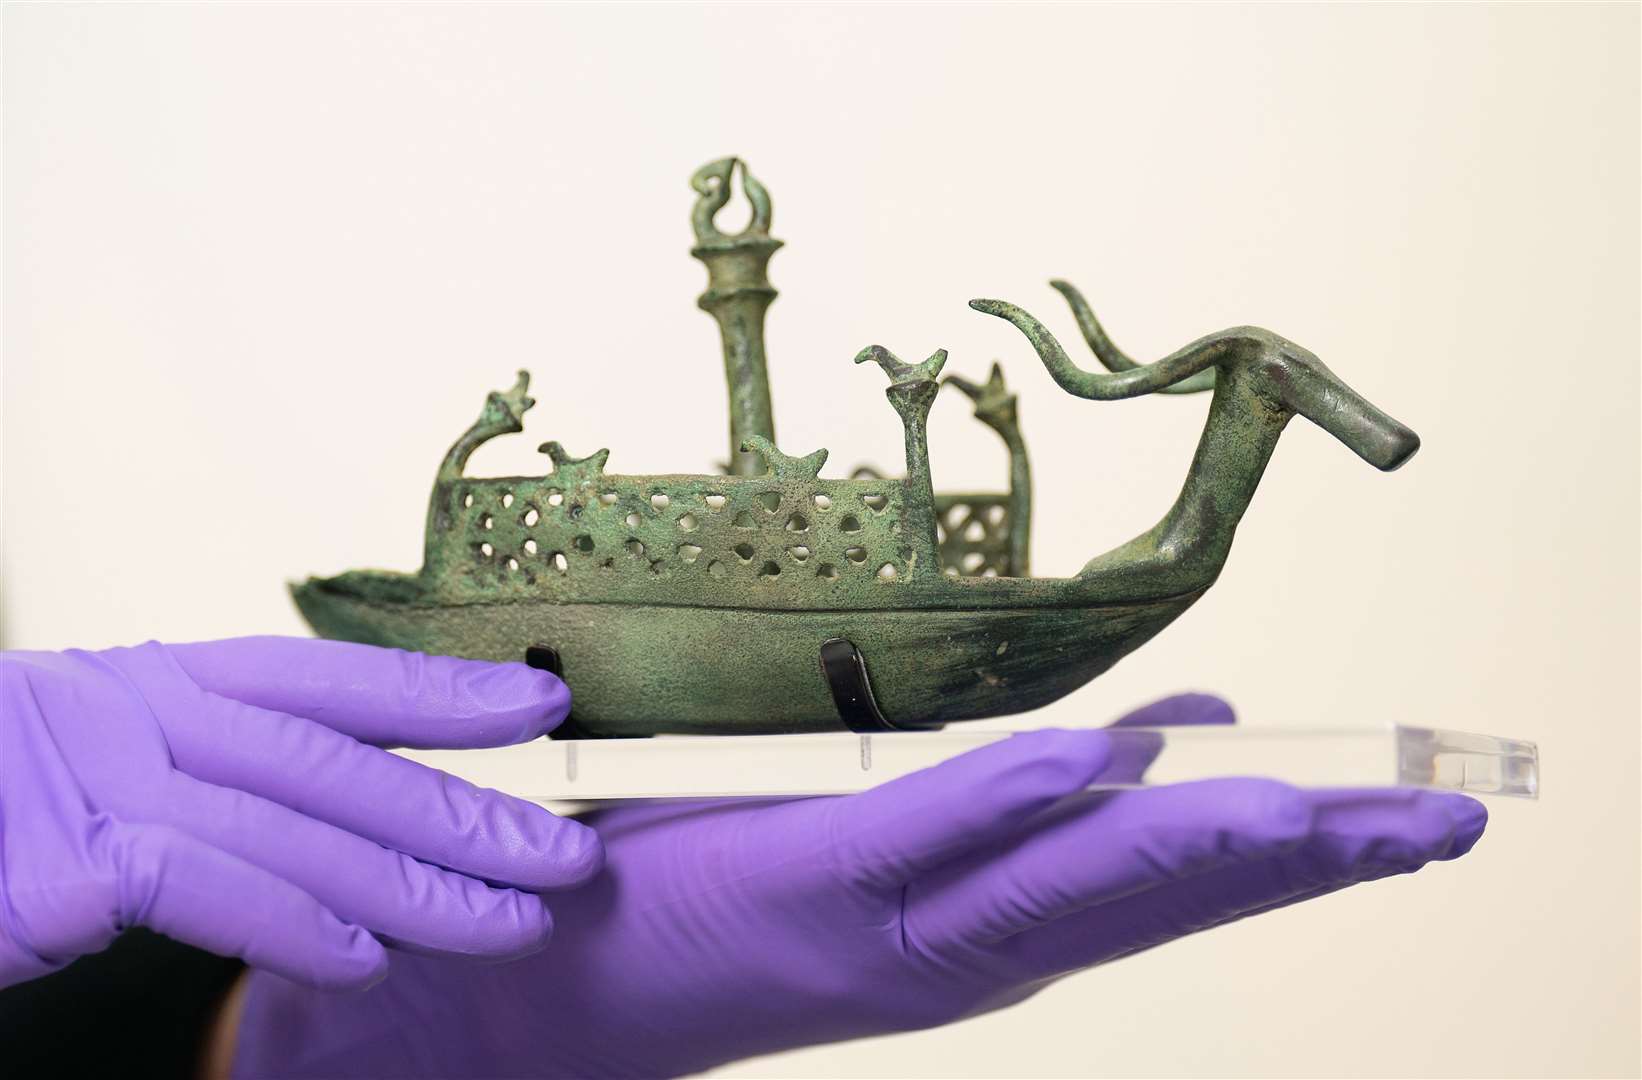 Bronze ‘navicella’ boat figurine from Orroli, Sardinia, dating from 1000- 700 BCE (Joe Giddens/PA)